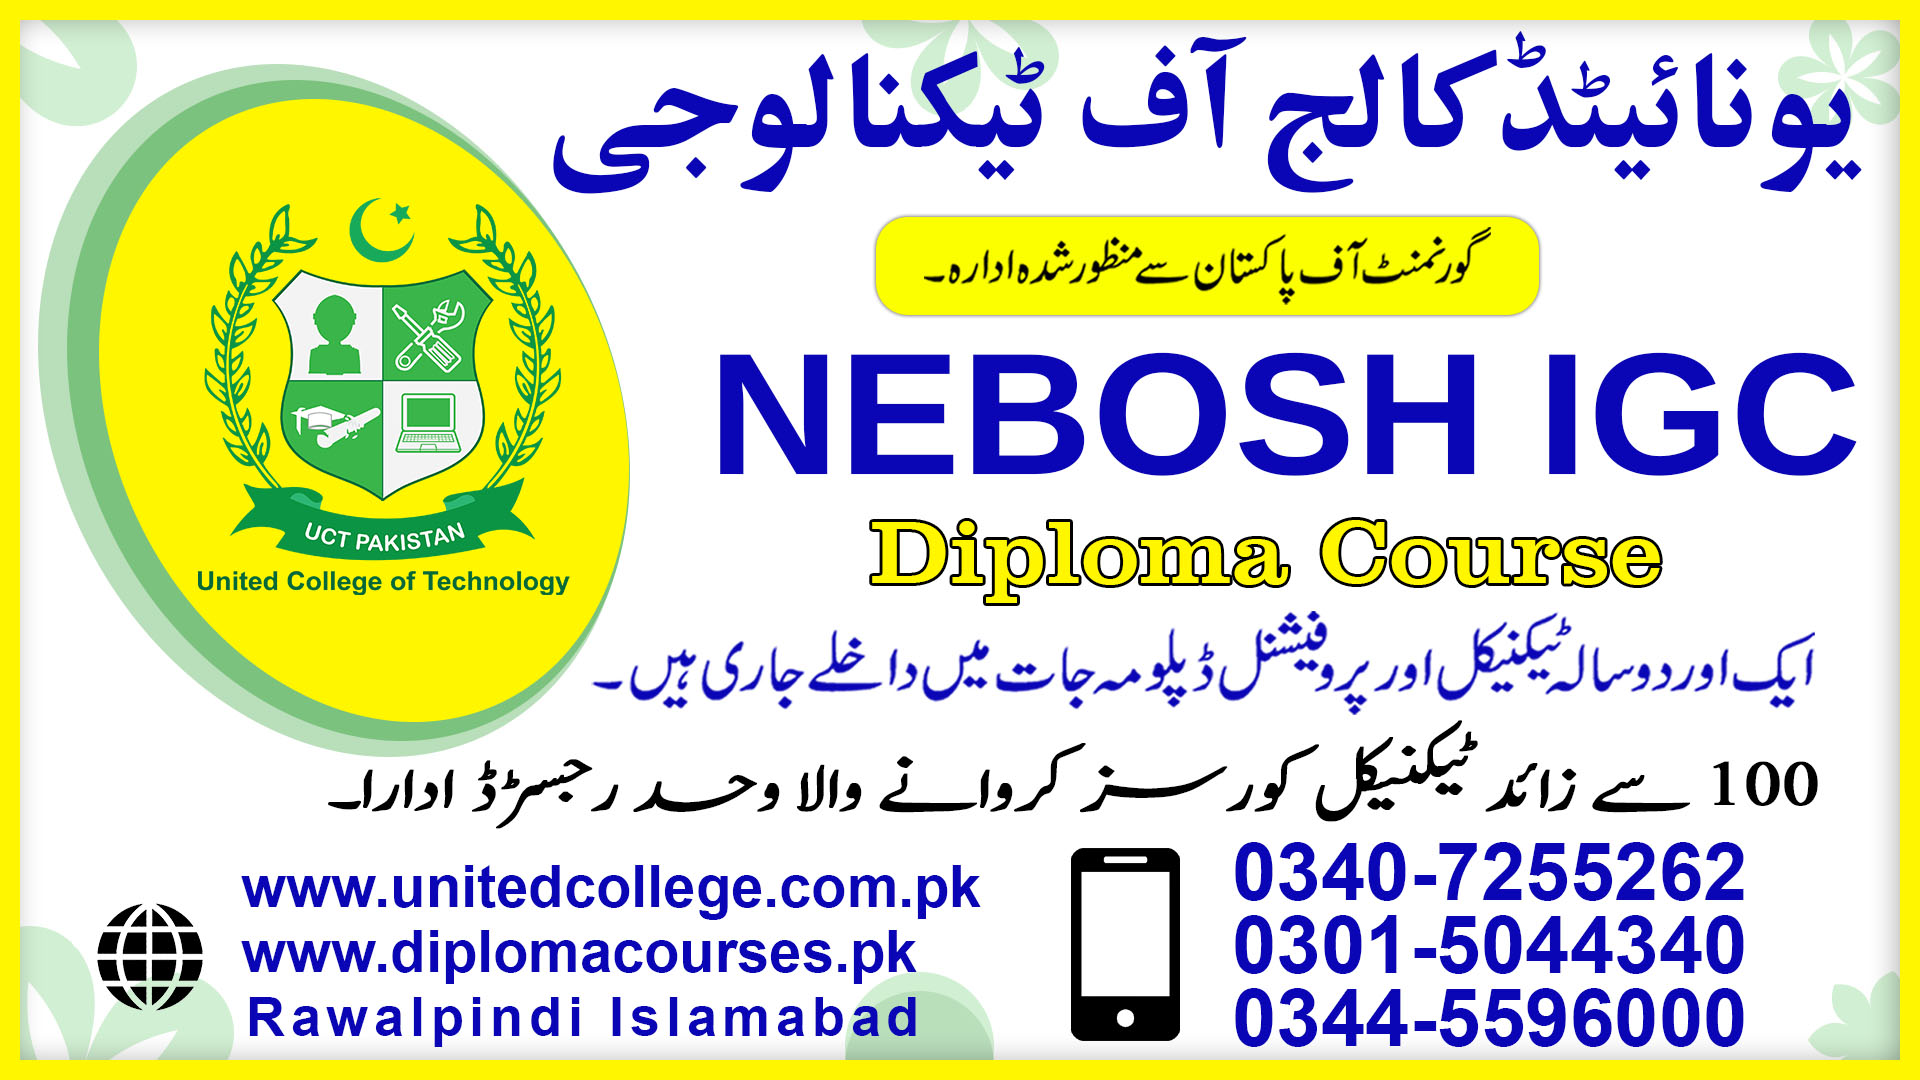 NEBOSH IGC COURSE IN PAKISTAN